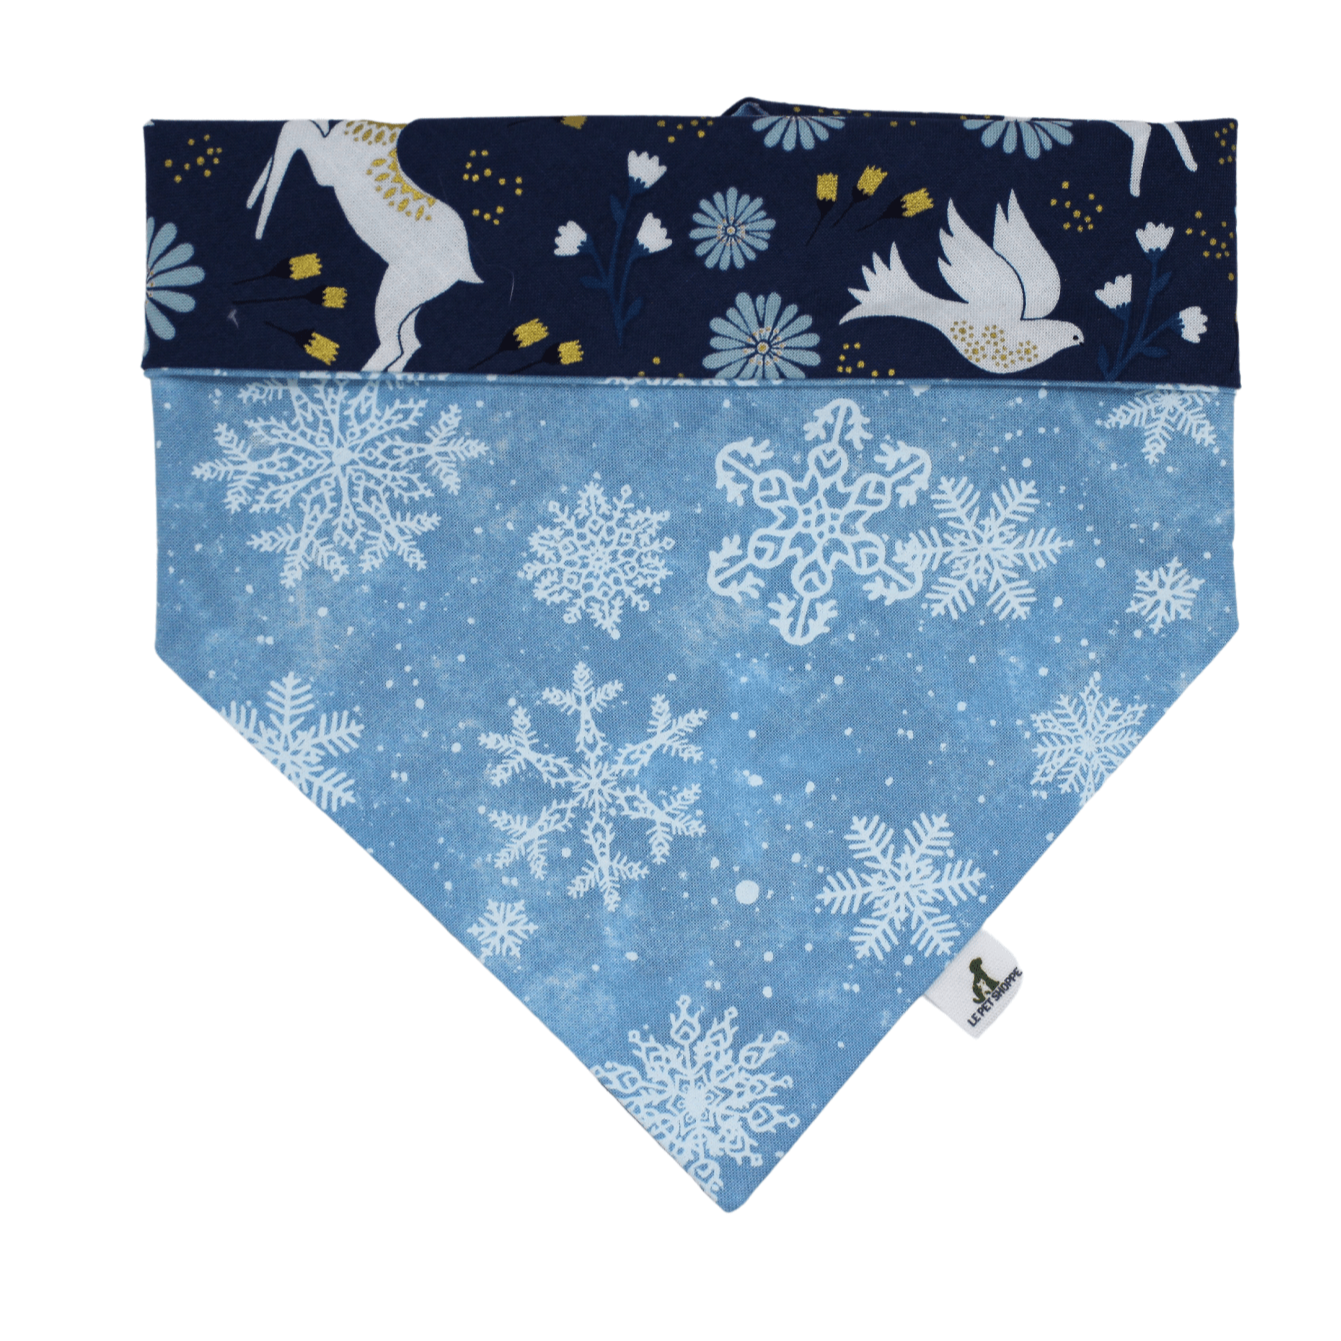 ''Let it snow'' bandana